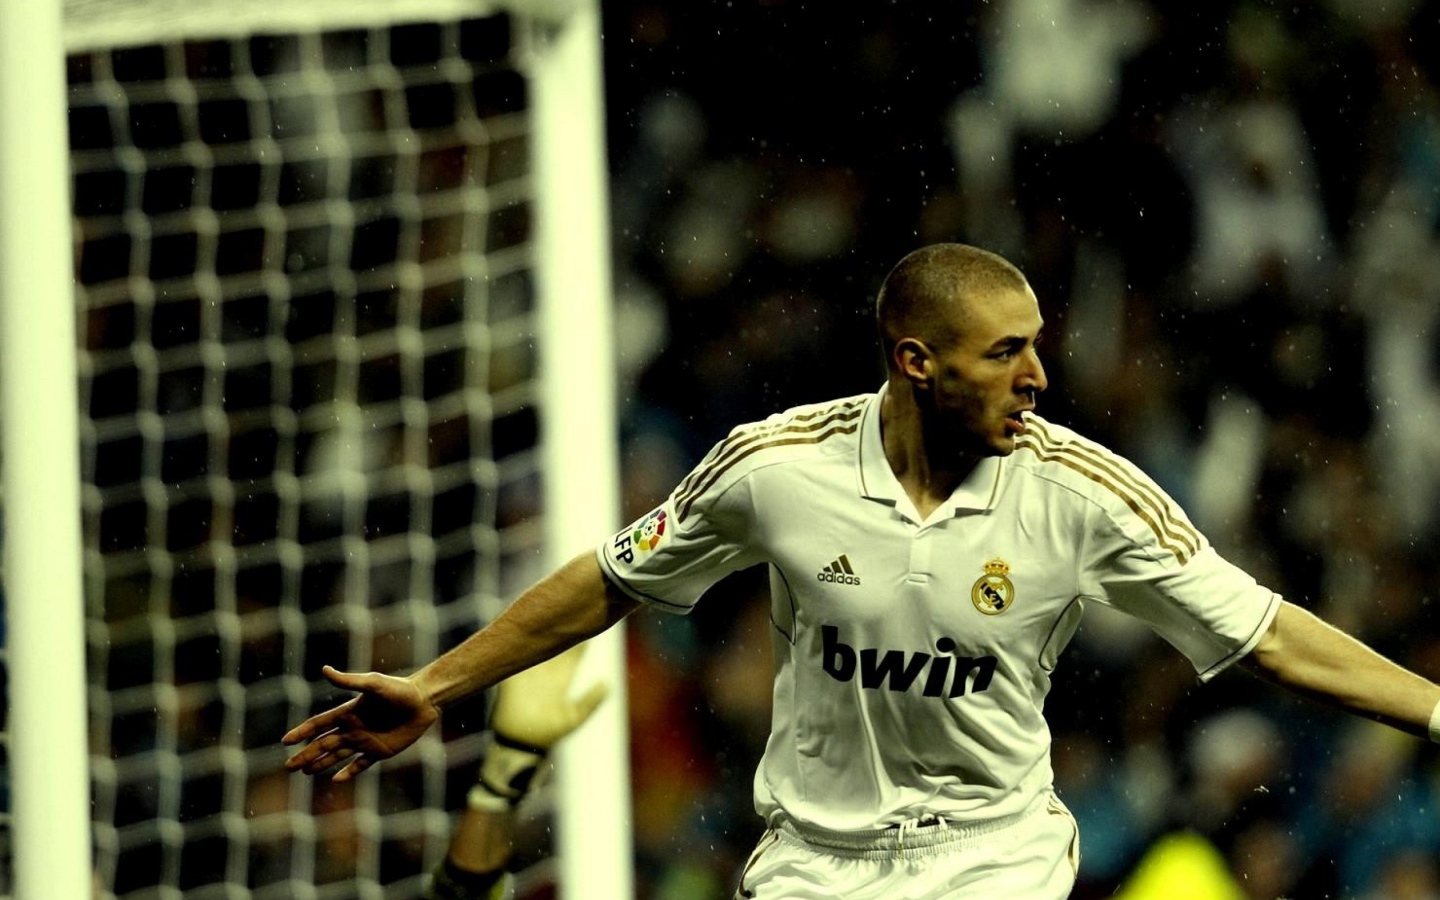 The player Real Madrid Karim Benzema scored a goal